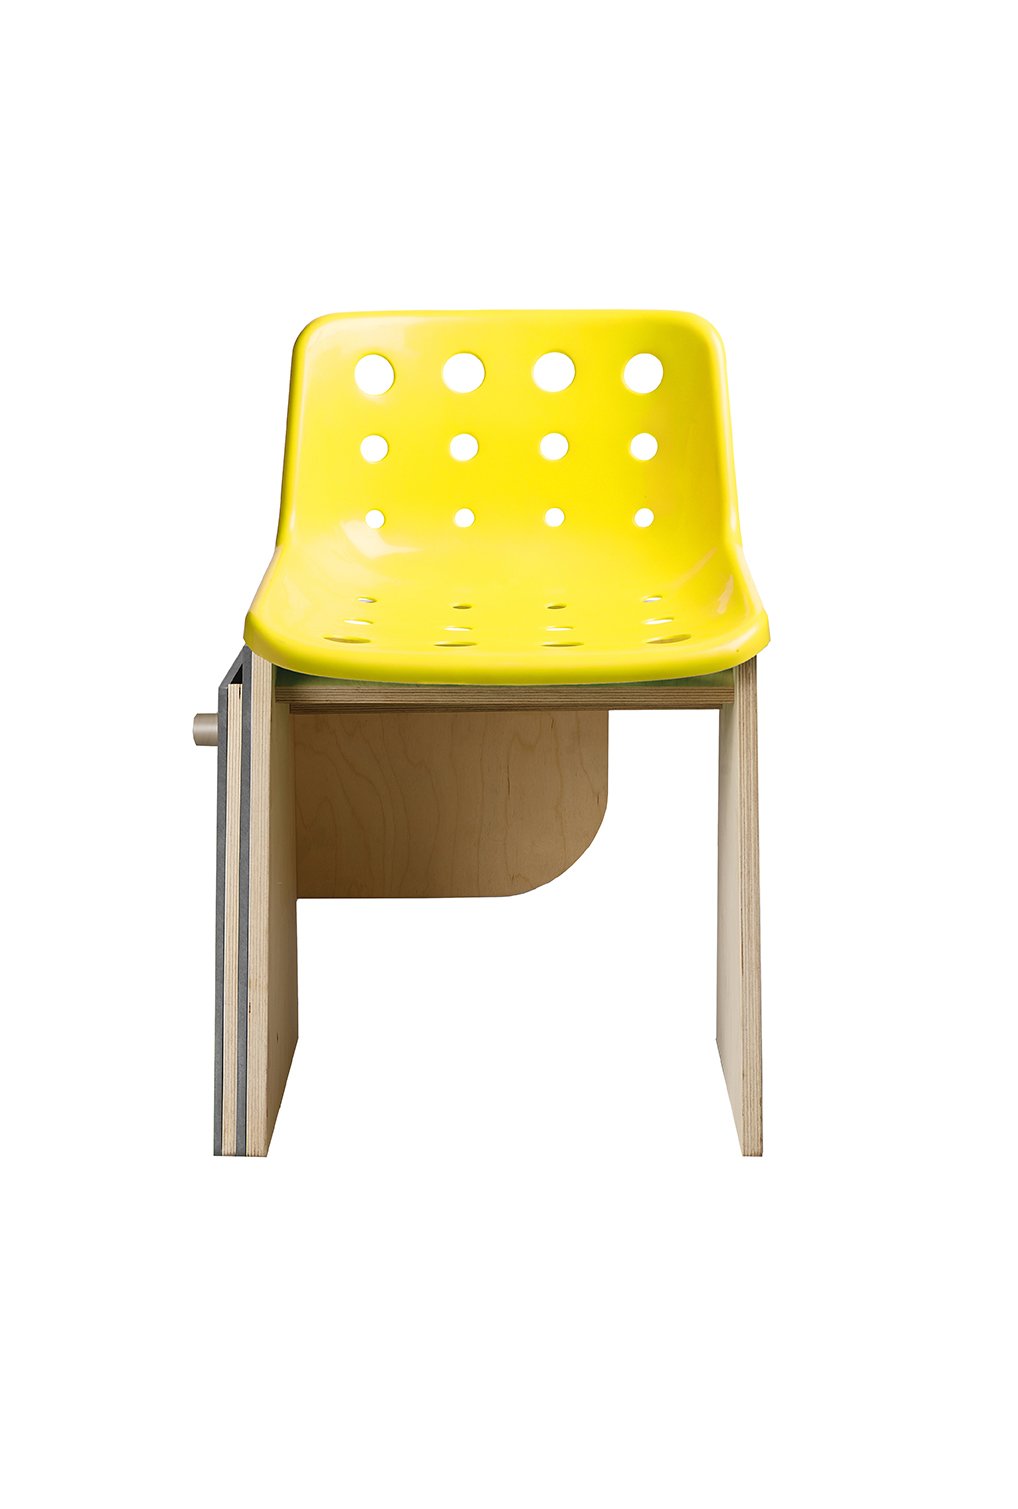 PoloPlæy Chair - New Seat